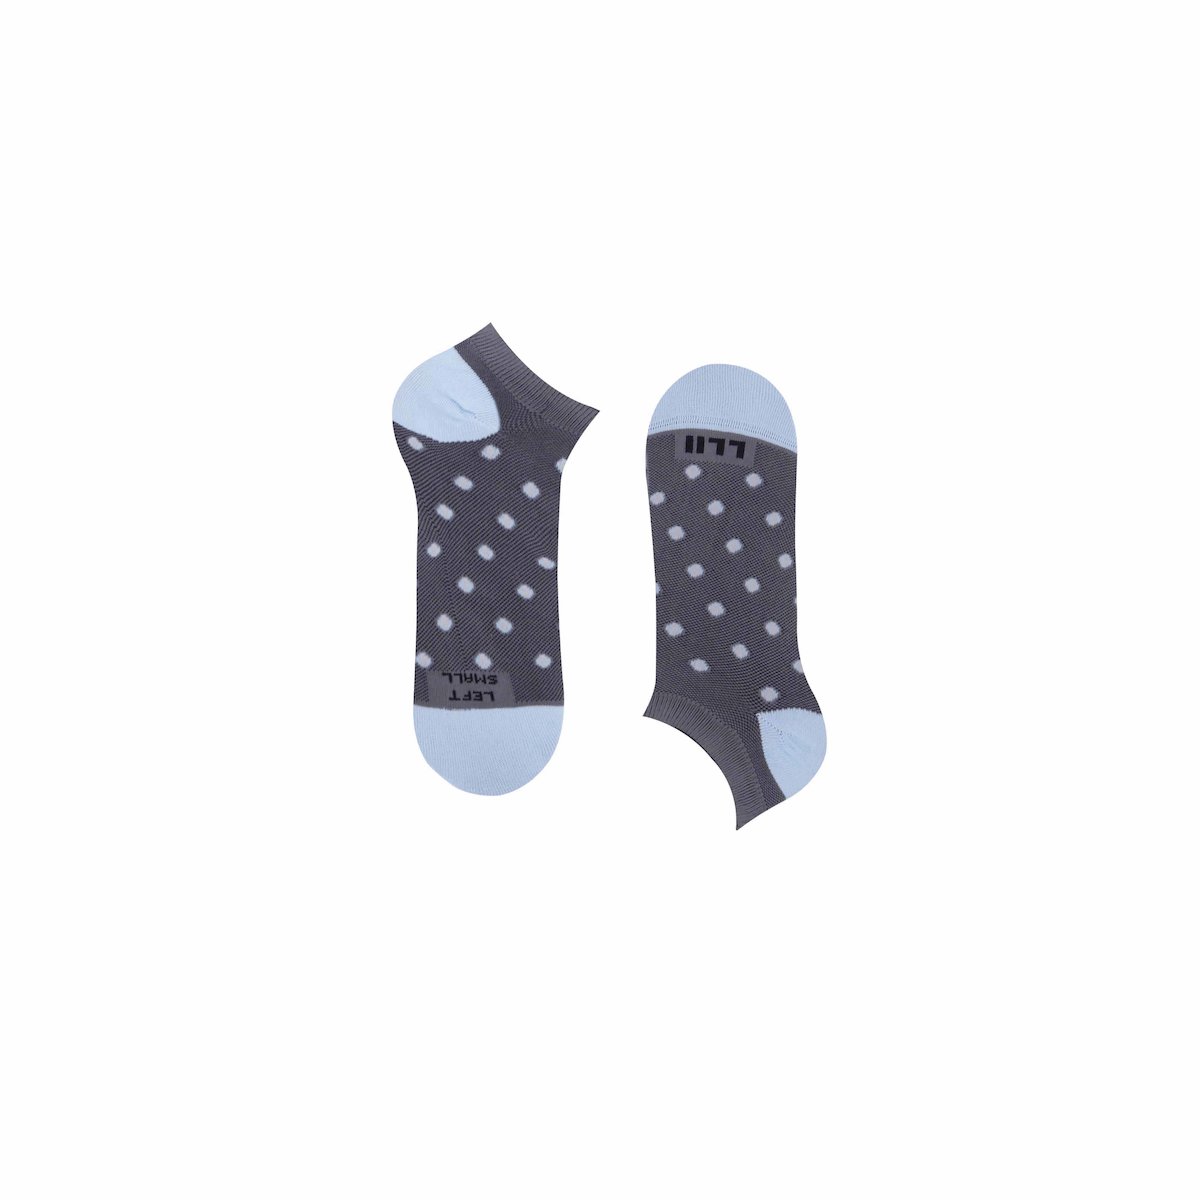 Double Dot Socks